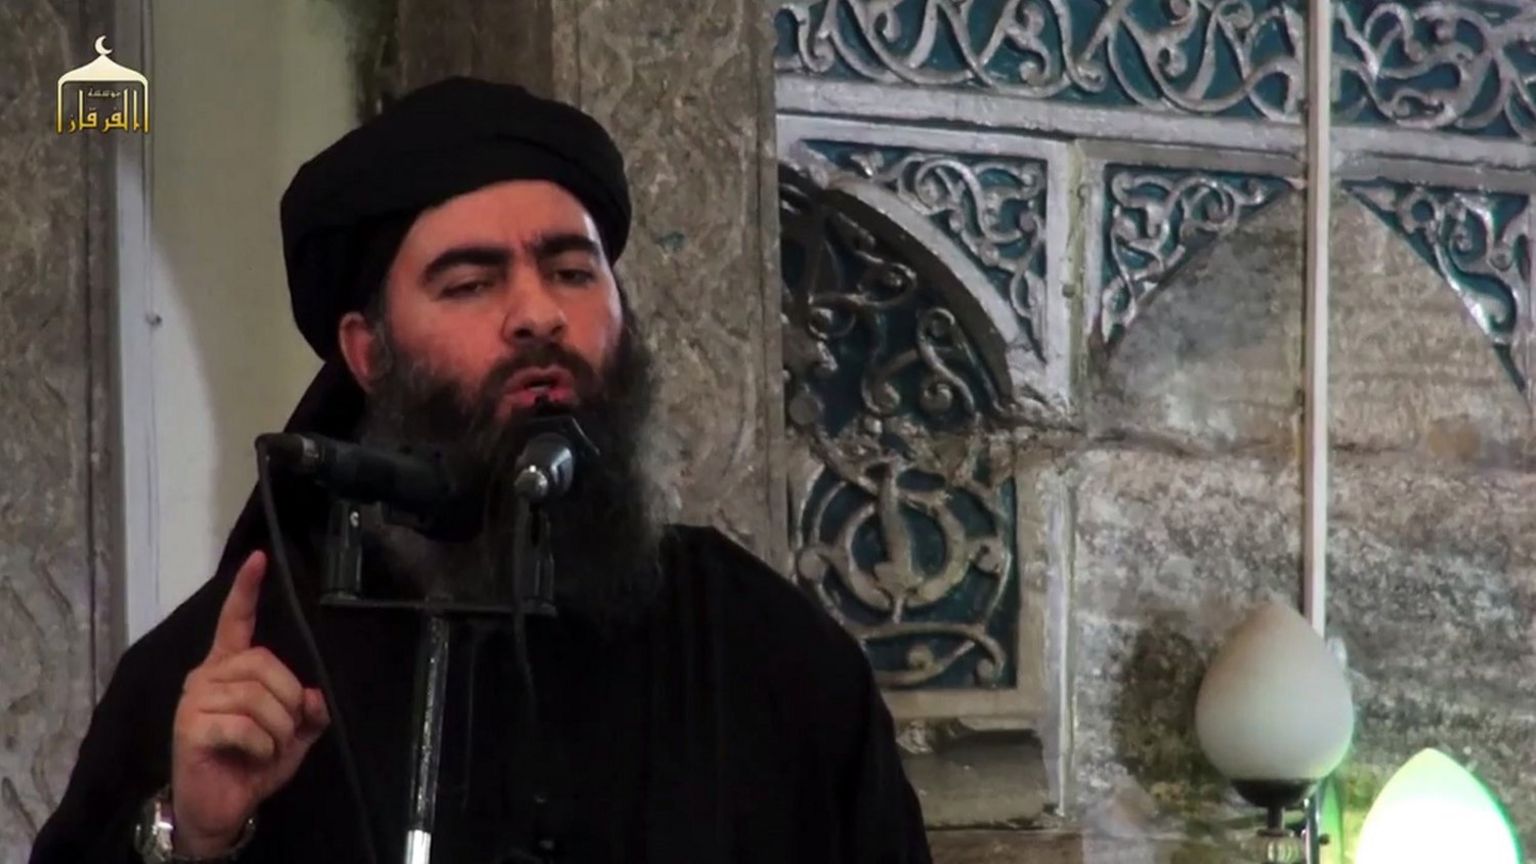 Abu Bakr al-Baghdadi speaks at Mosul's Great Mosque of al-Nuri on 5 July 2014